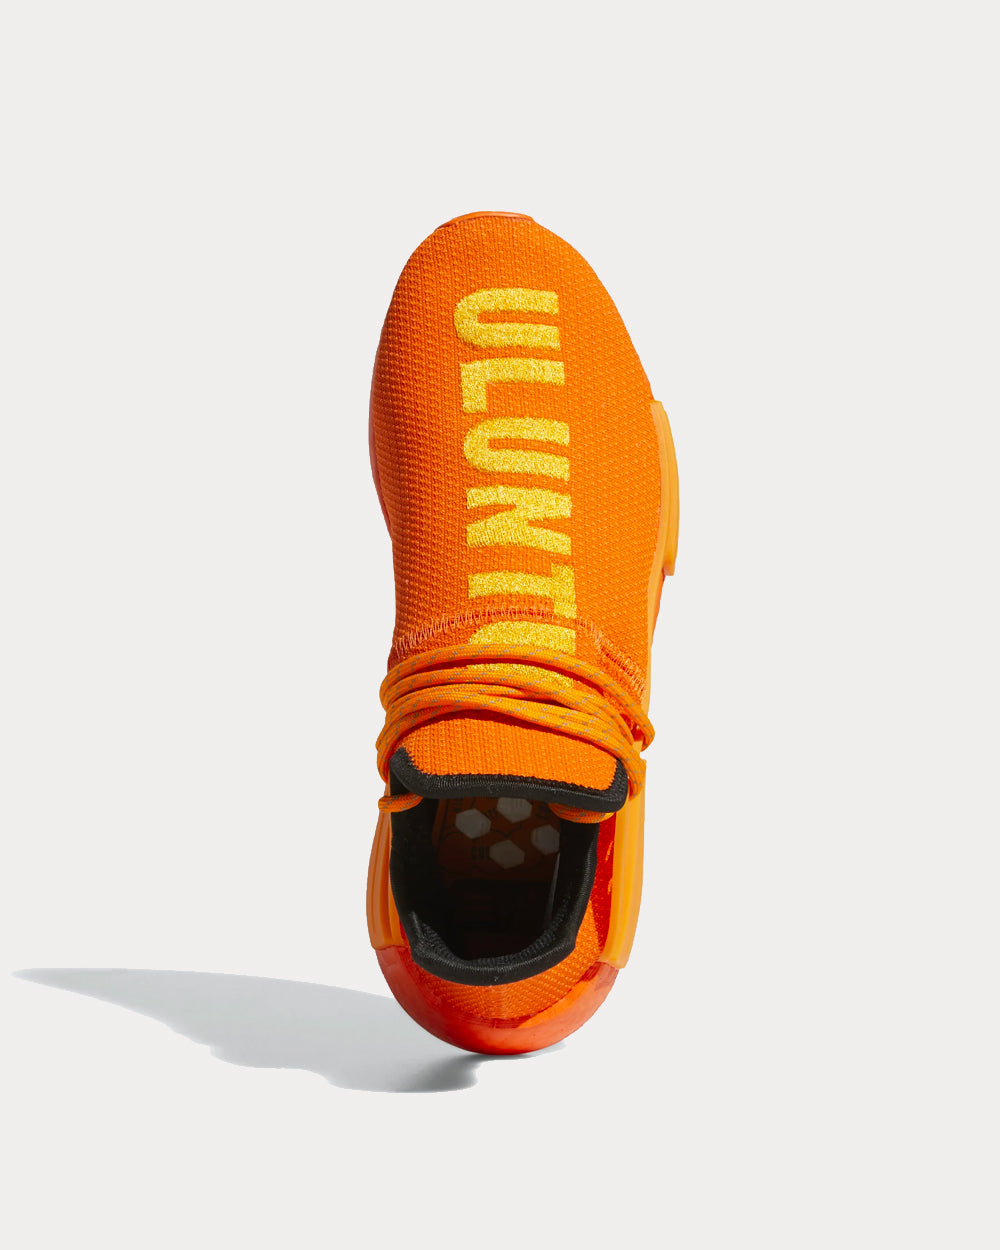 Adidas x Pharrell Williams - HU NMD Orange / Bright Orange / Core Black Low Top Sneakers